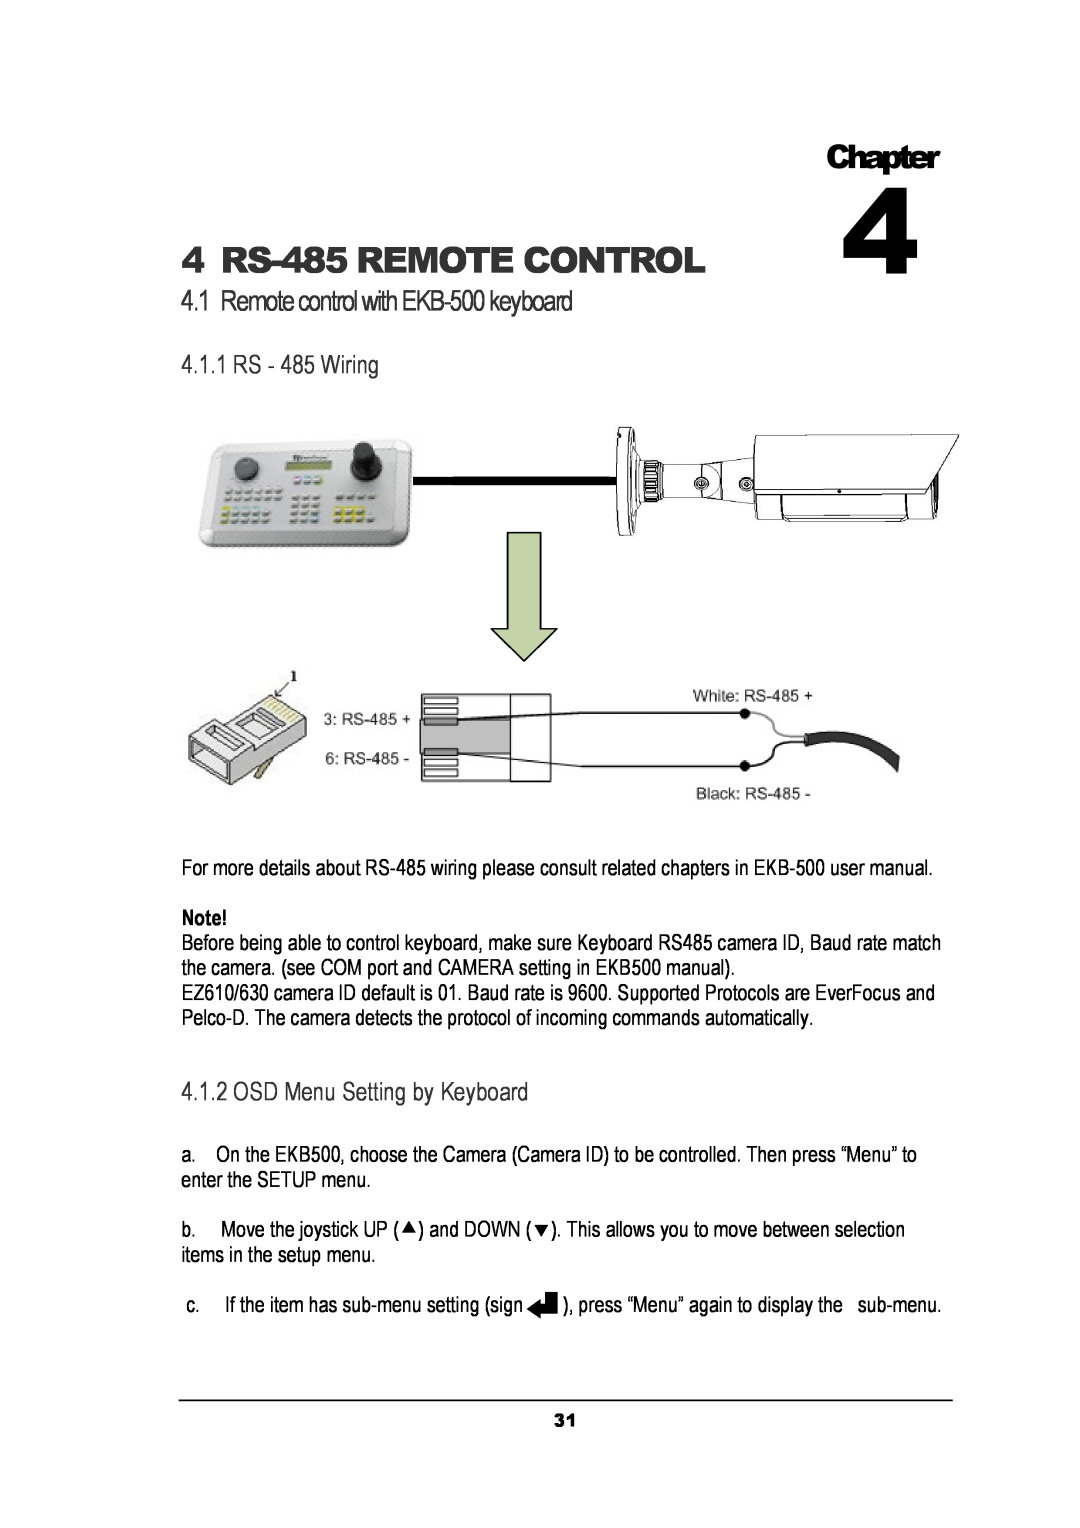 EverFocus EZ630 RS-485 REMOTE CONTROL, Remote control with EKB-500 keyboard, RS - 485 Wiring, OSD Menu Setting by Keyboard 